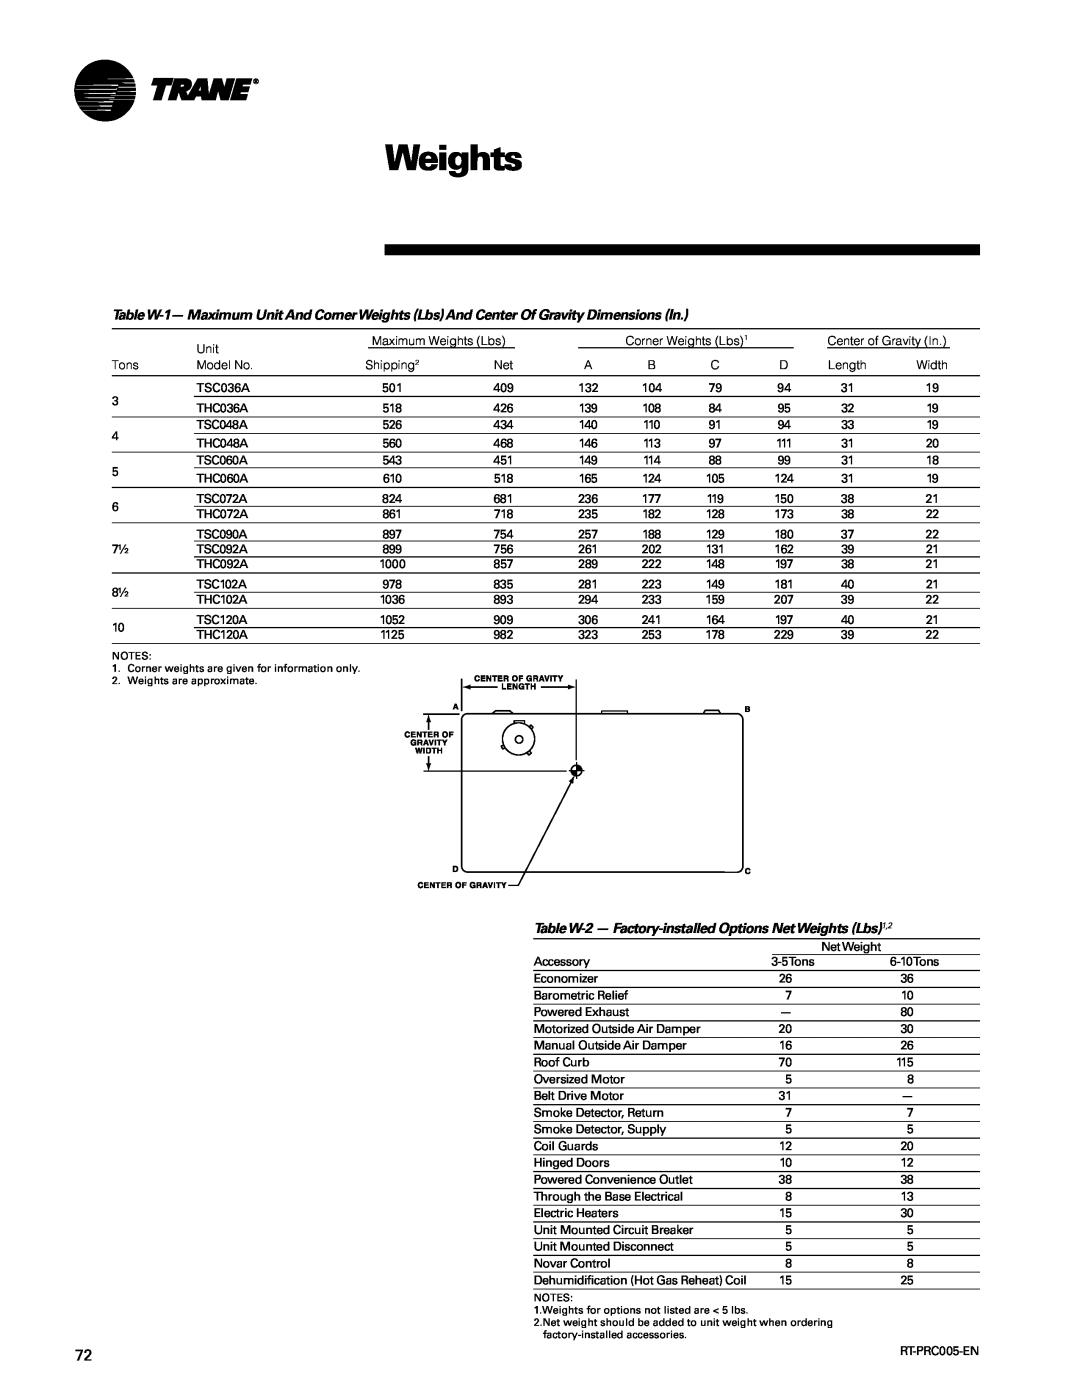 Trane RT-PRC005 manual Weights 